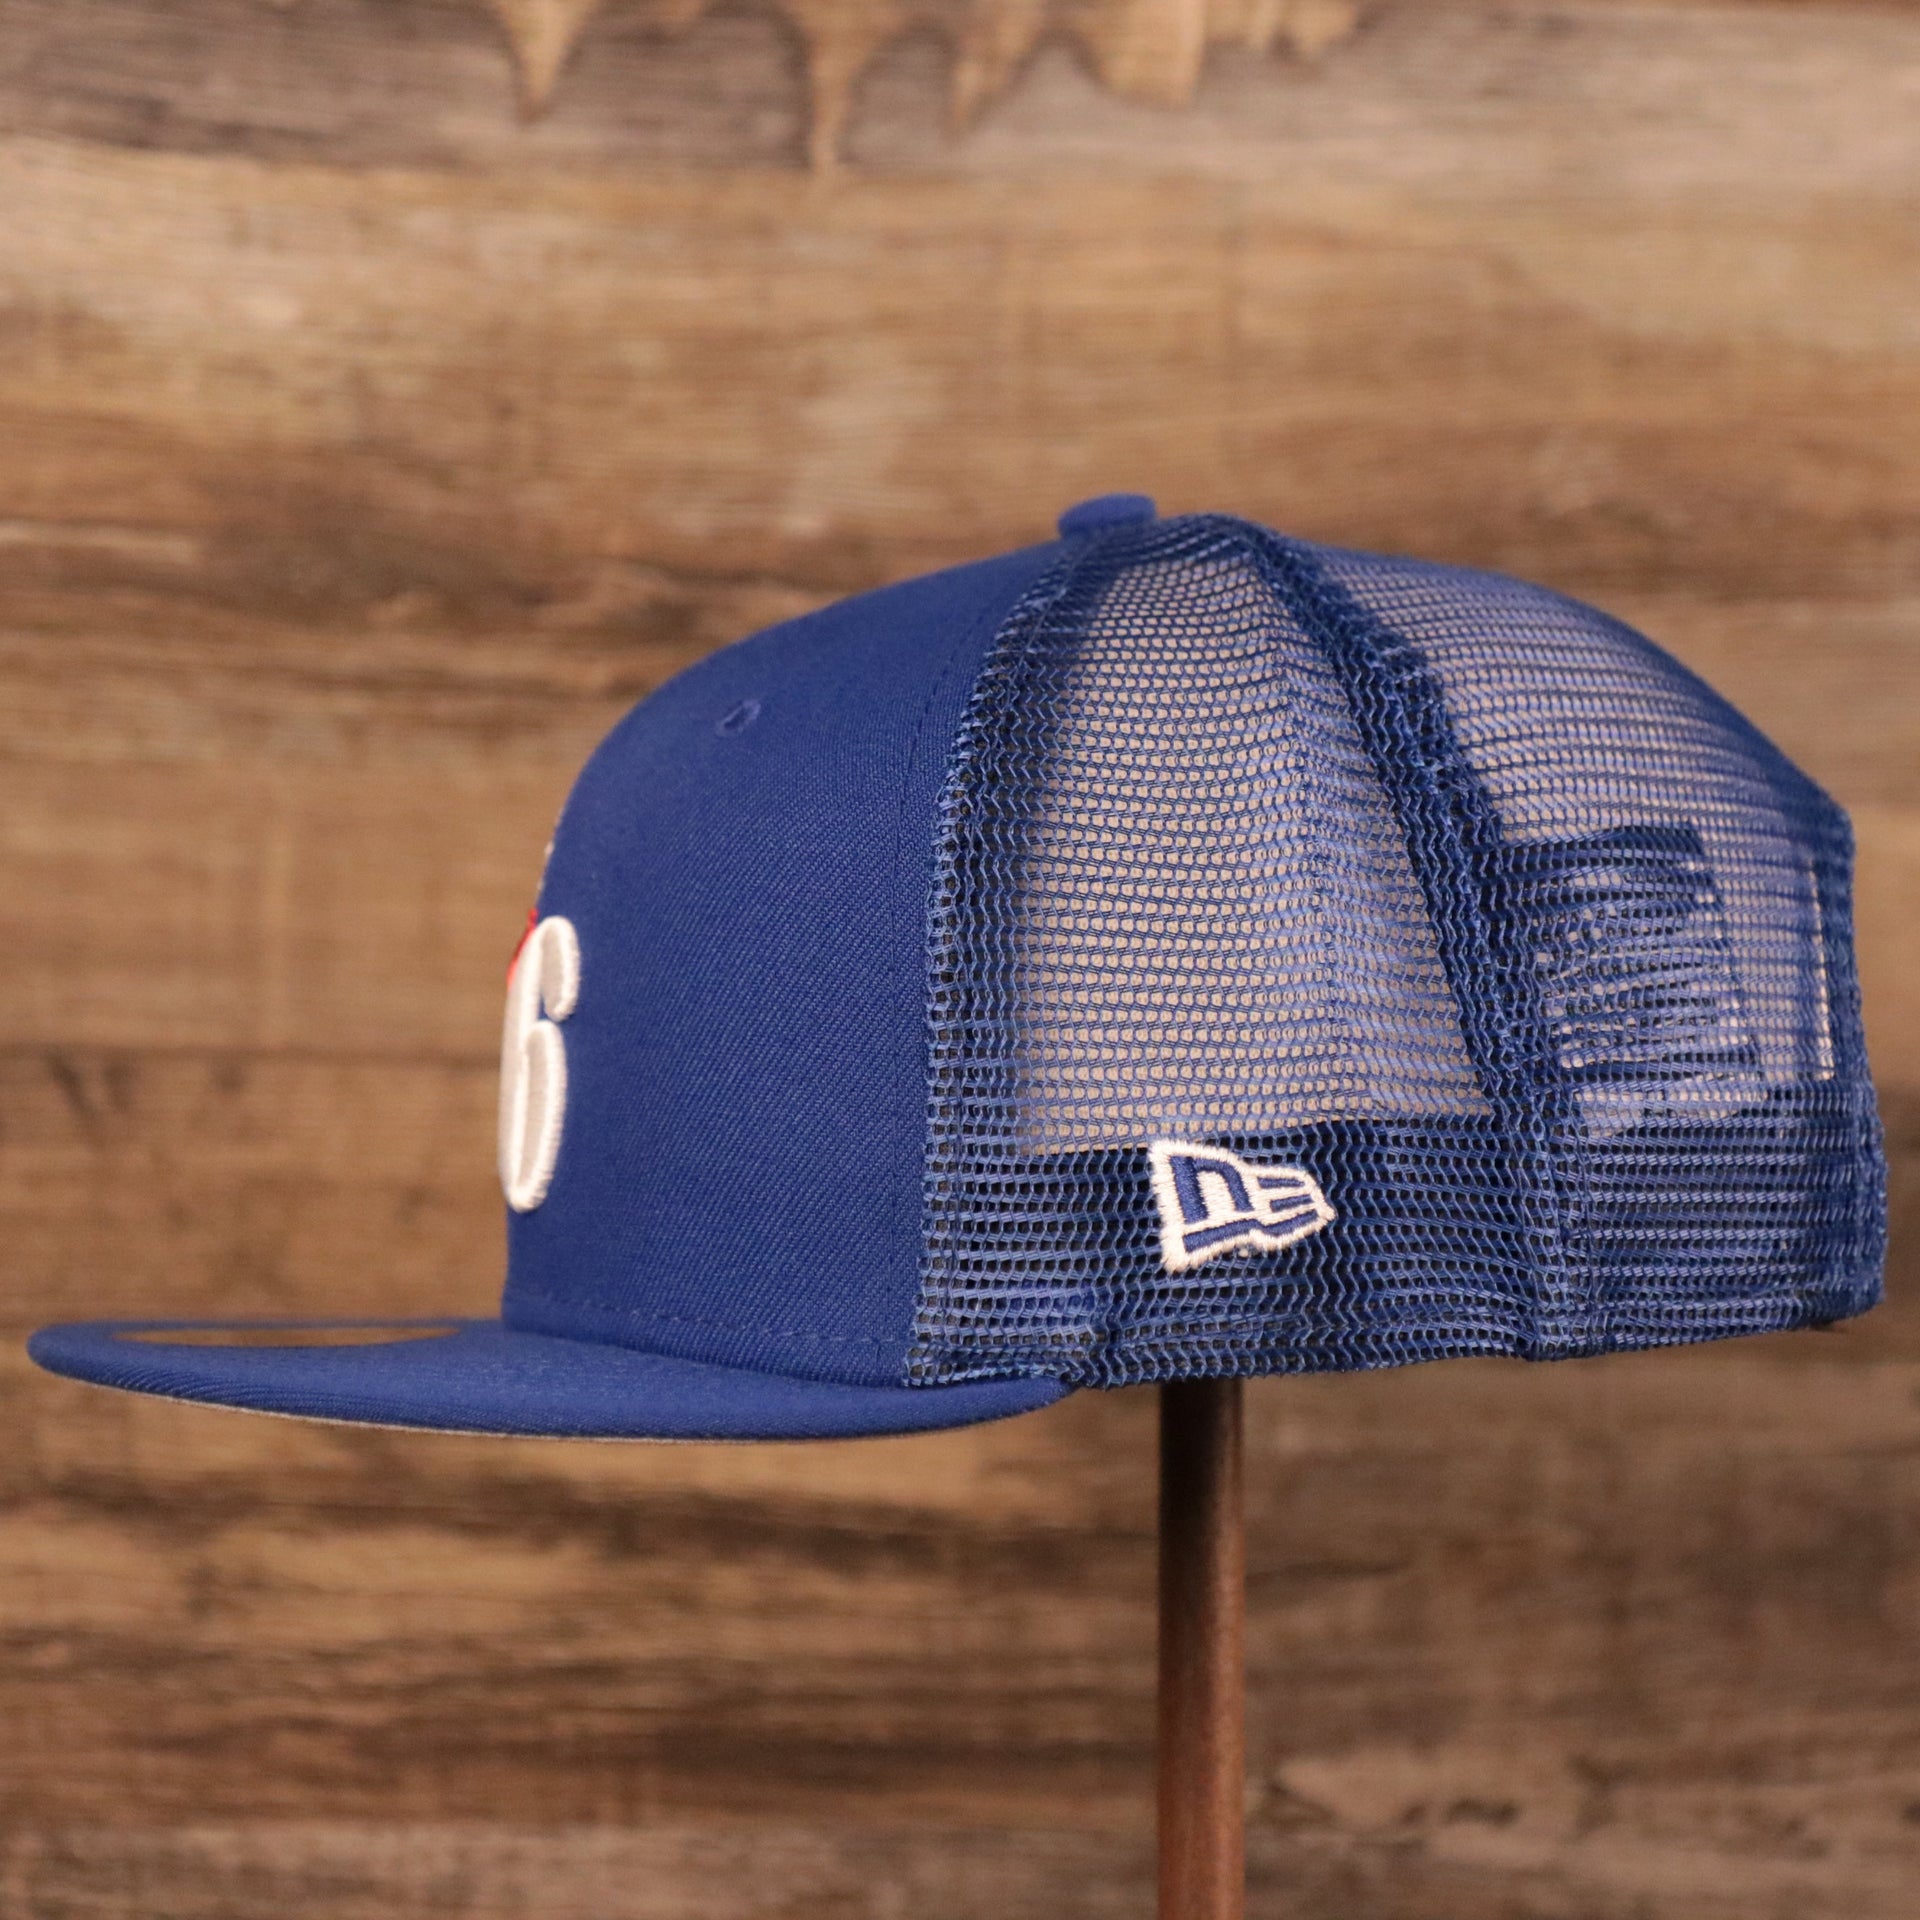 The left side of the Philadelphia 76ers royal blue trucker hat has the logo of New Era.